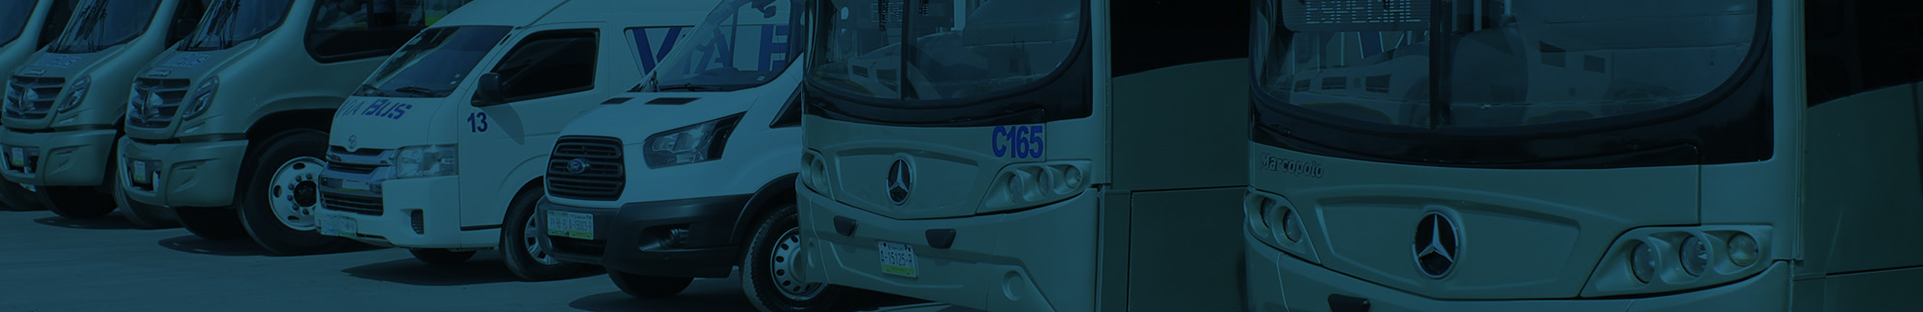 viabus-servicios-bg